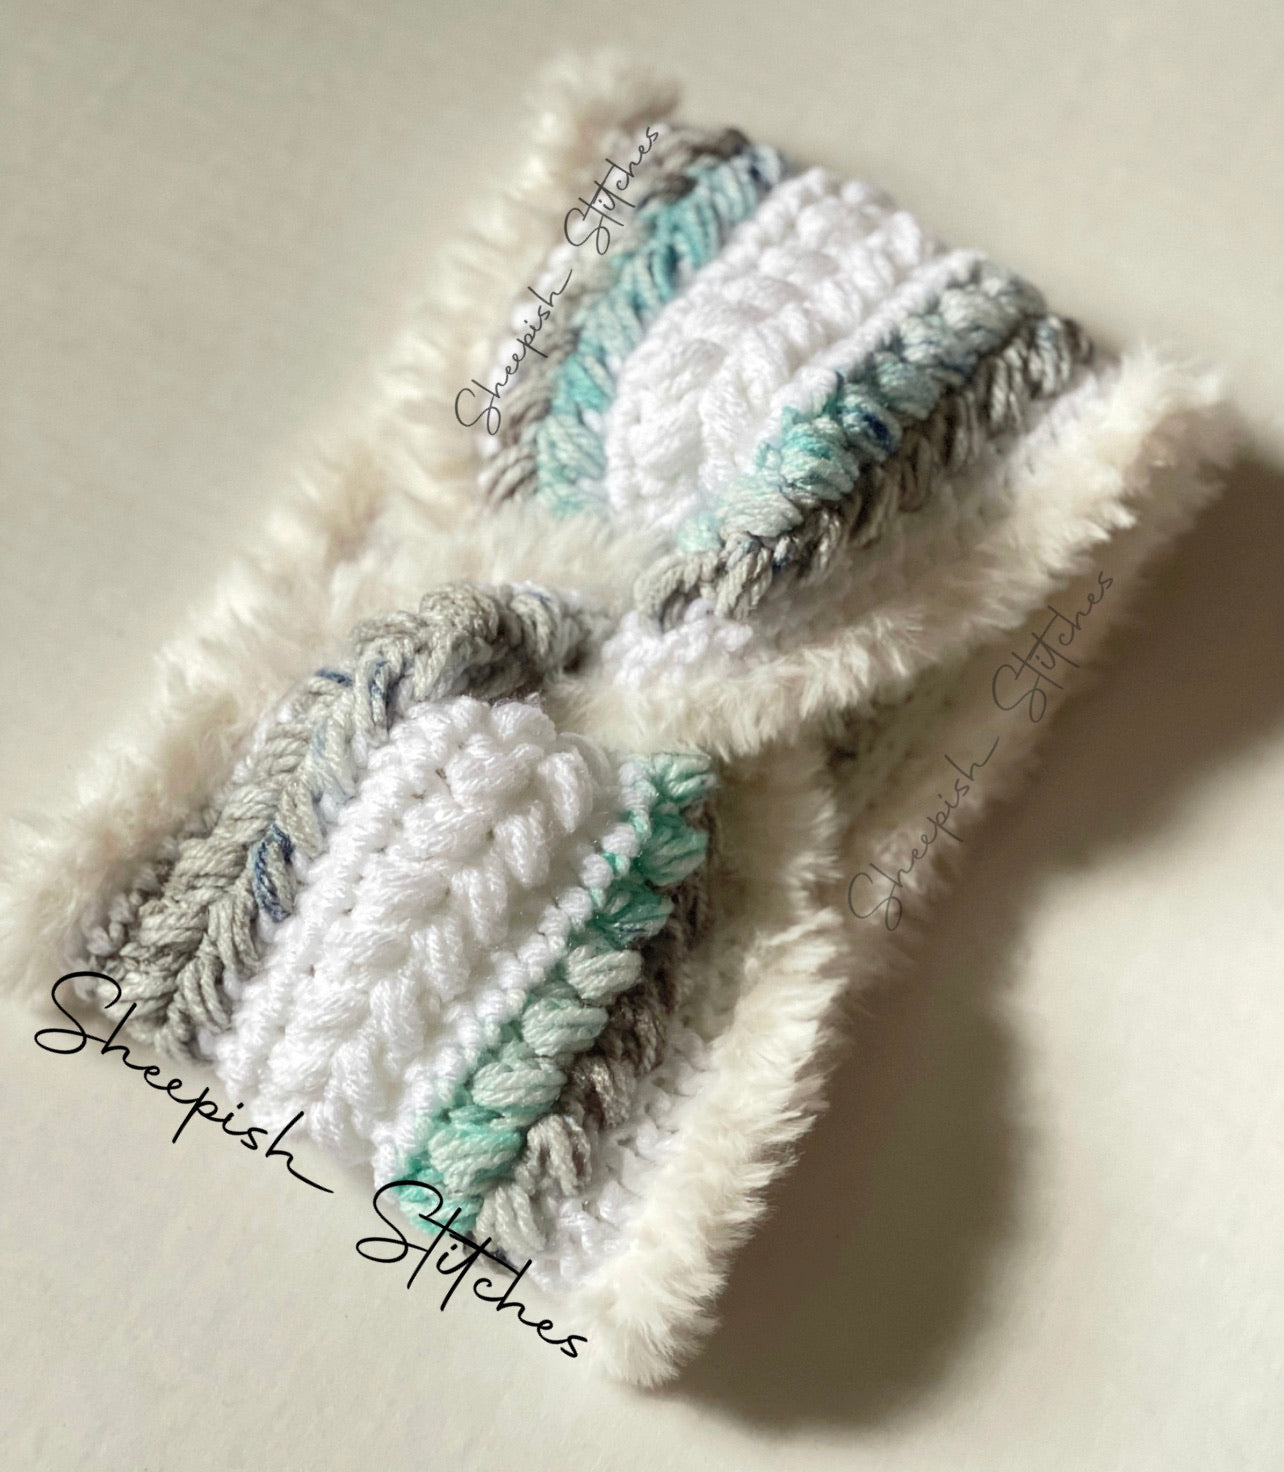 Harvest Braid Ear Warmer Crochet Pattern by Sheepish Stitches